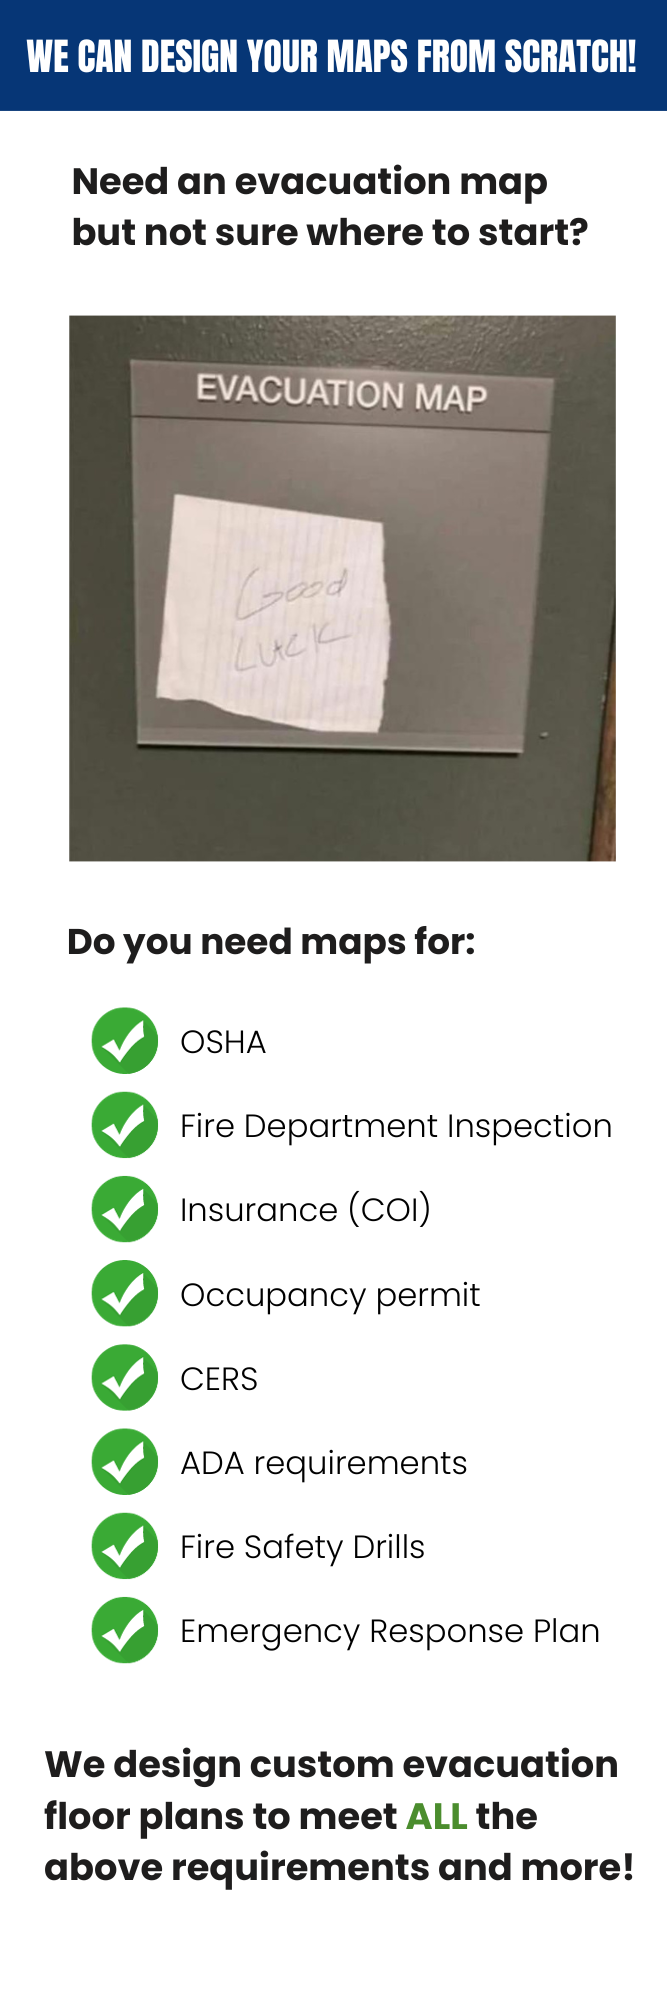 Custom evacuation floor plan to meet OSHA, inspection, insurance, occupancy permit, CERS, ADA